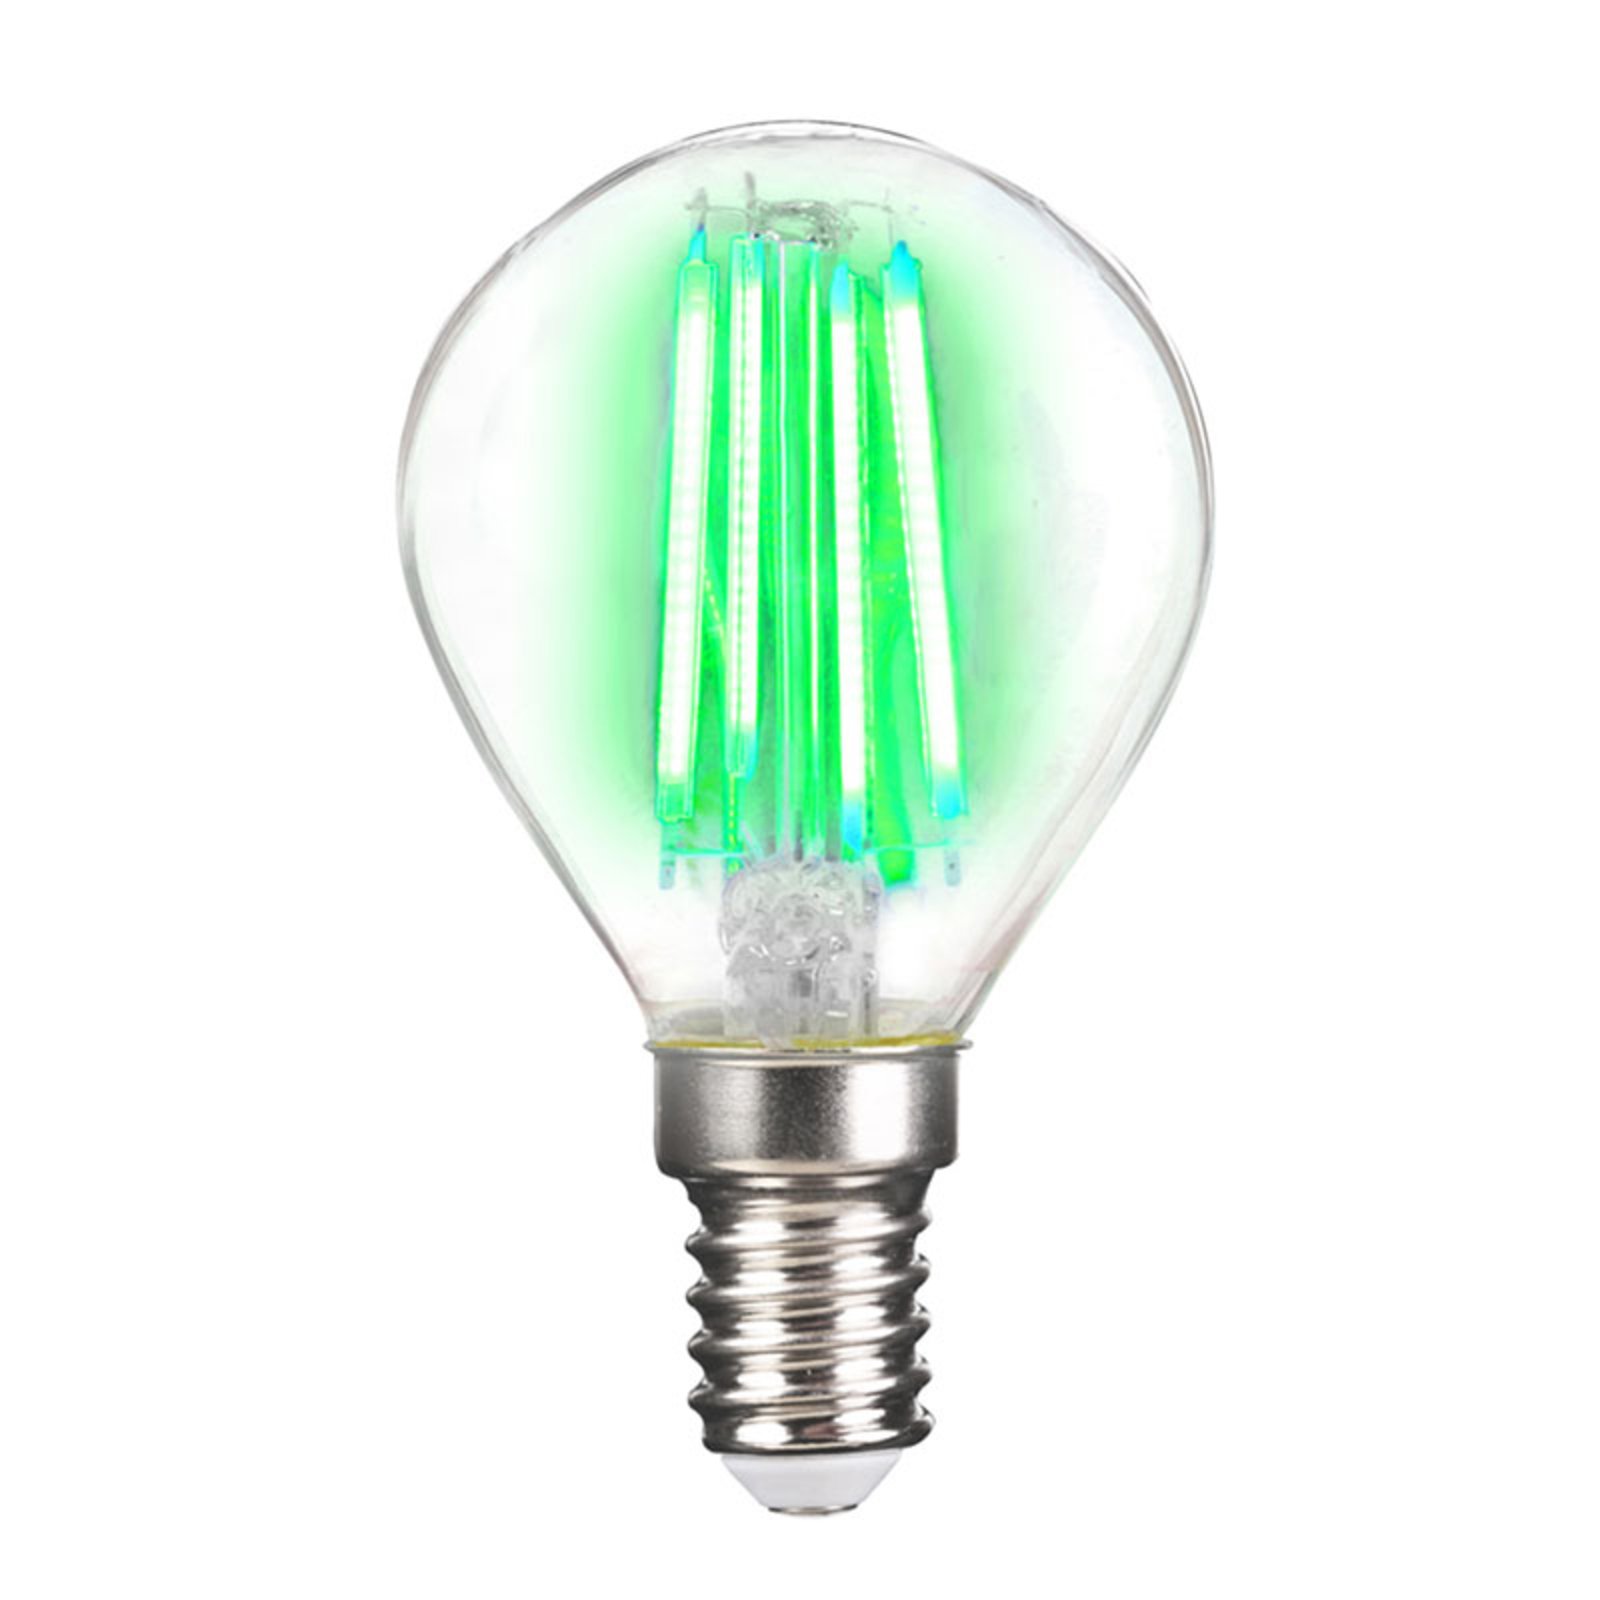 LED lámpa E14 4W izzószál, zöld